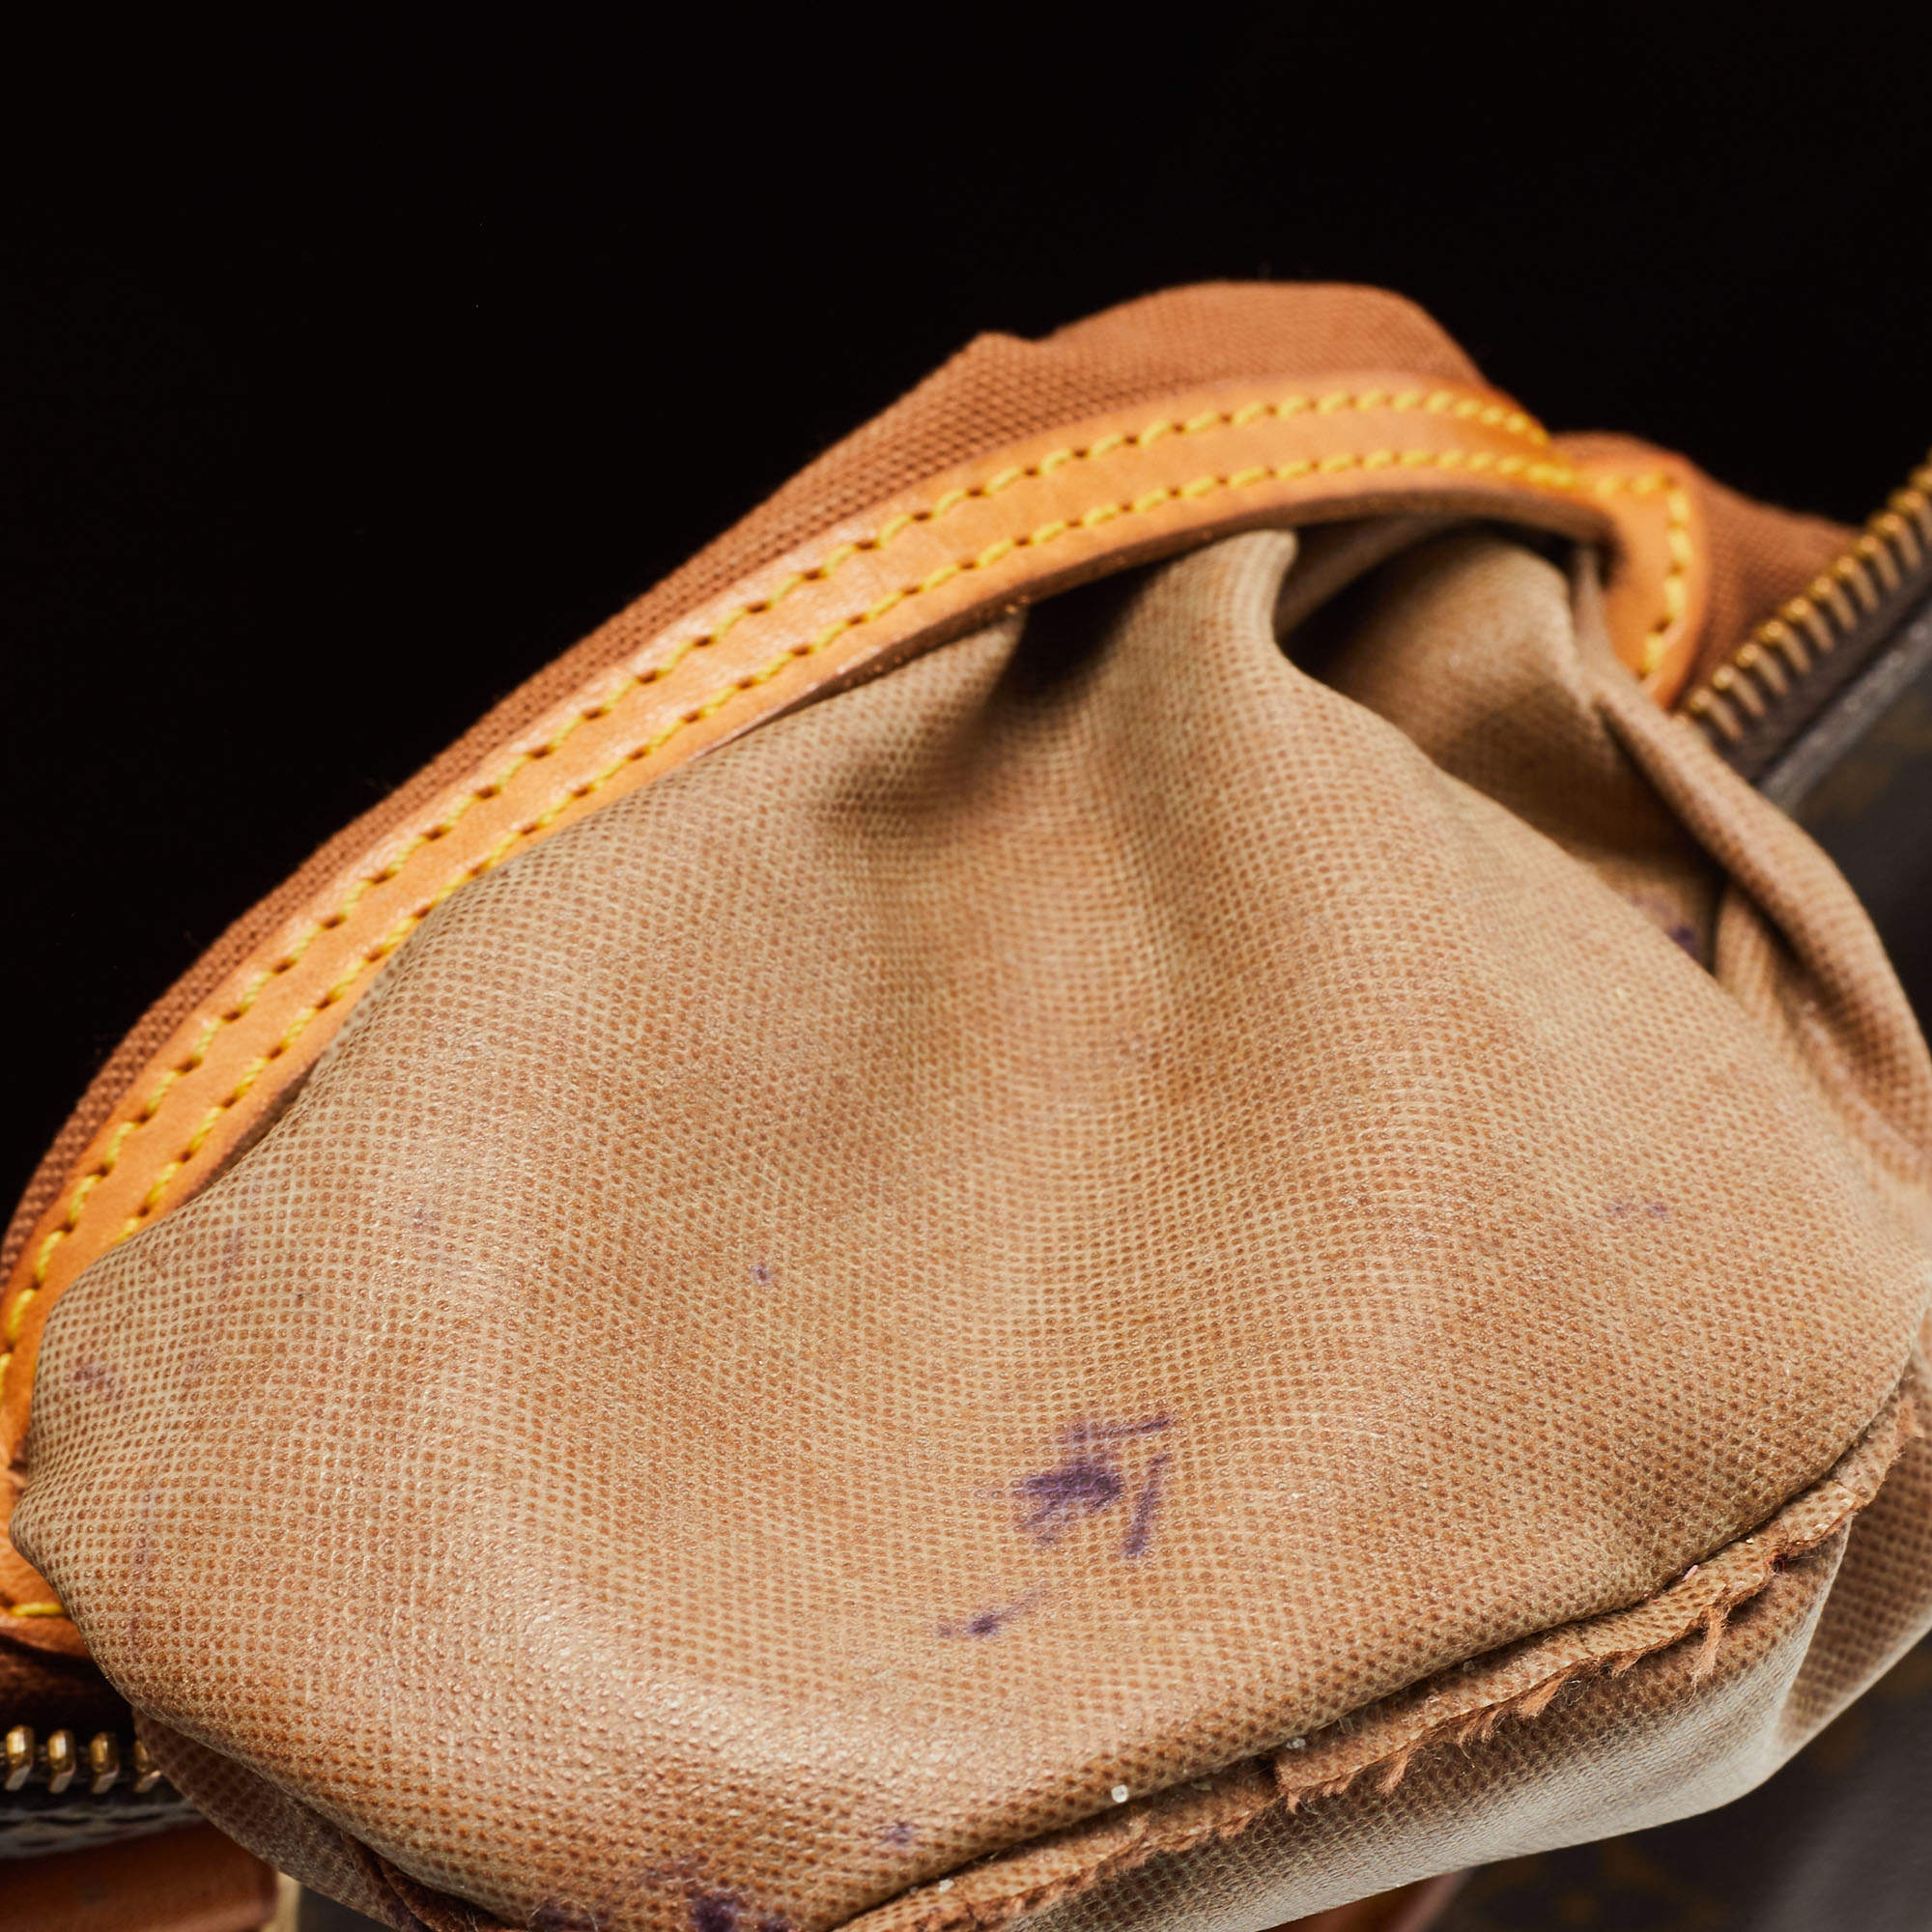 Louis Vuitton, Bags, Louis Vuitton Speedy 3 Bag